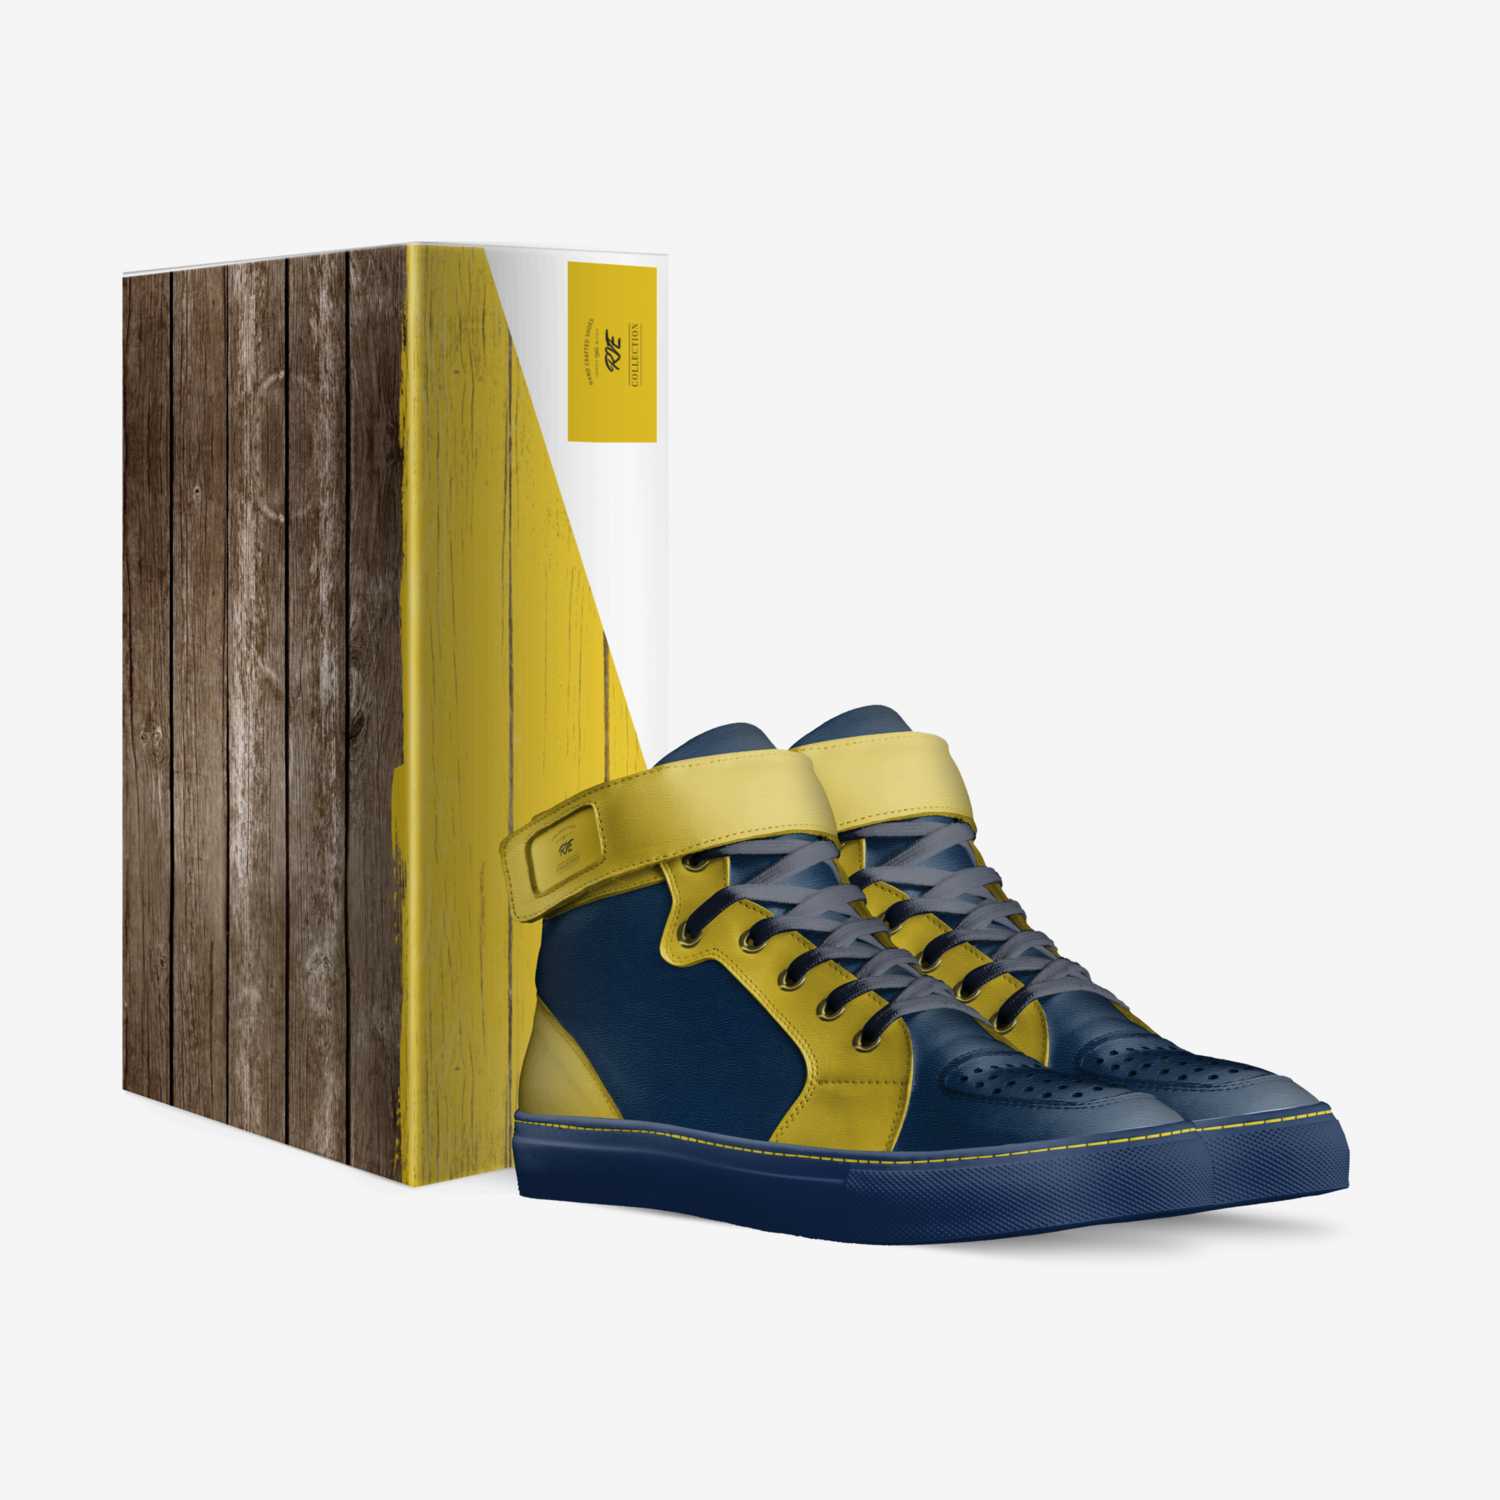 RVE custom made in Italy shoes by Kderjay Arminova | Box view